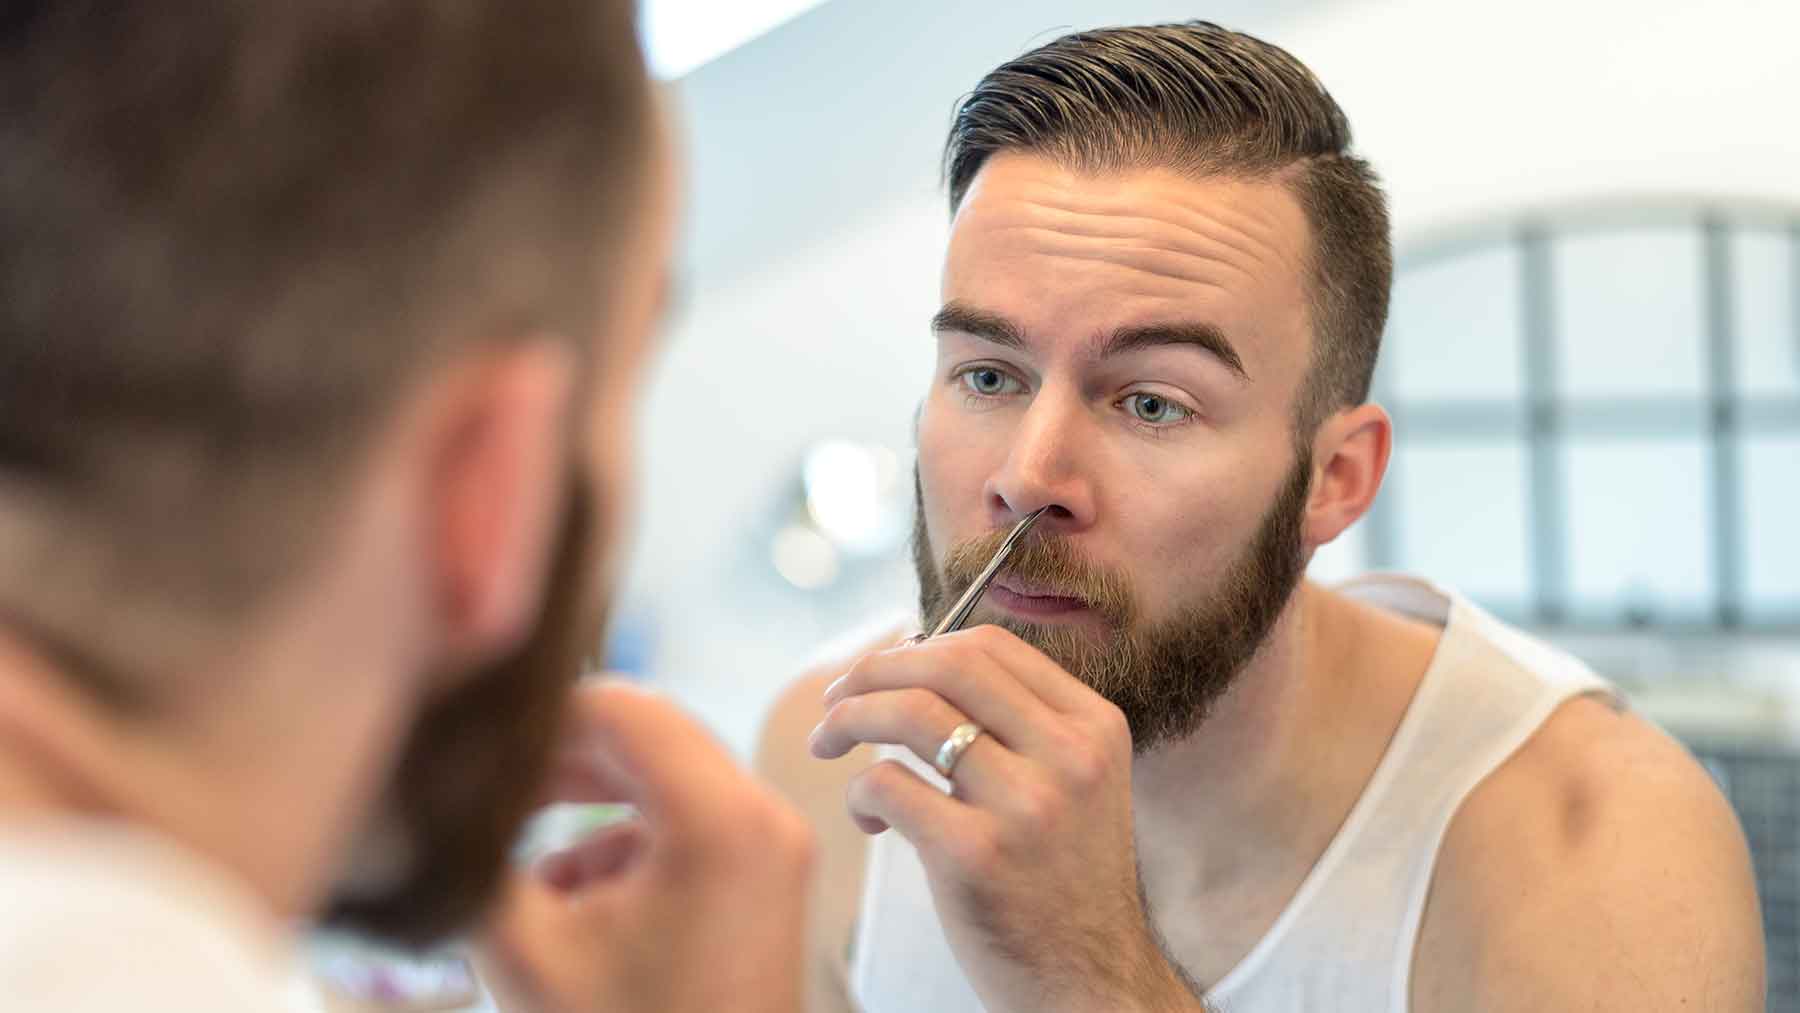 Nose Wax Kit for Men Women Eyebrows Ears Lips Facial Nose Hair Removal Wax